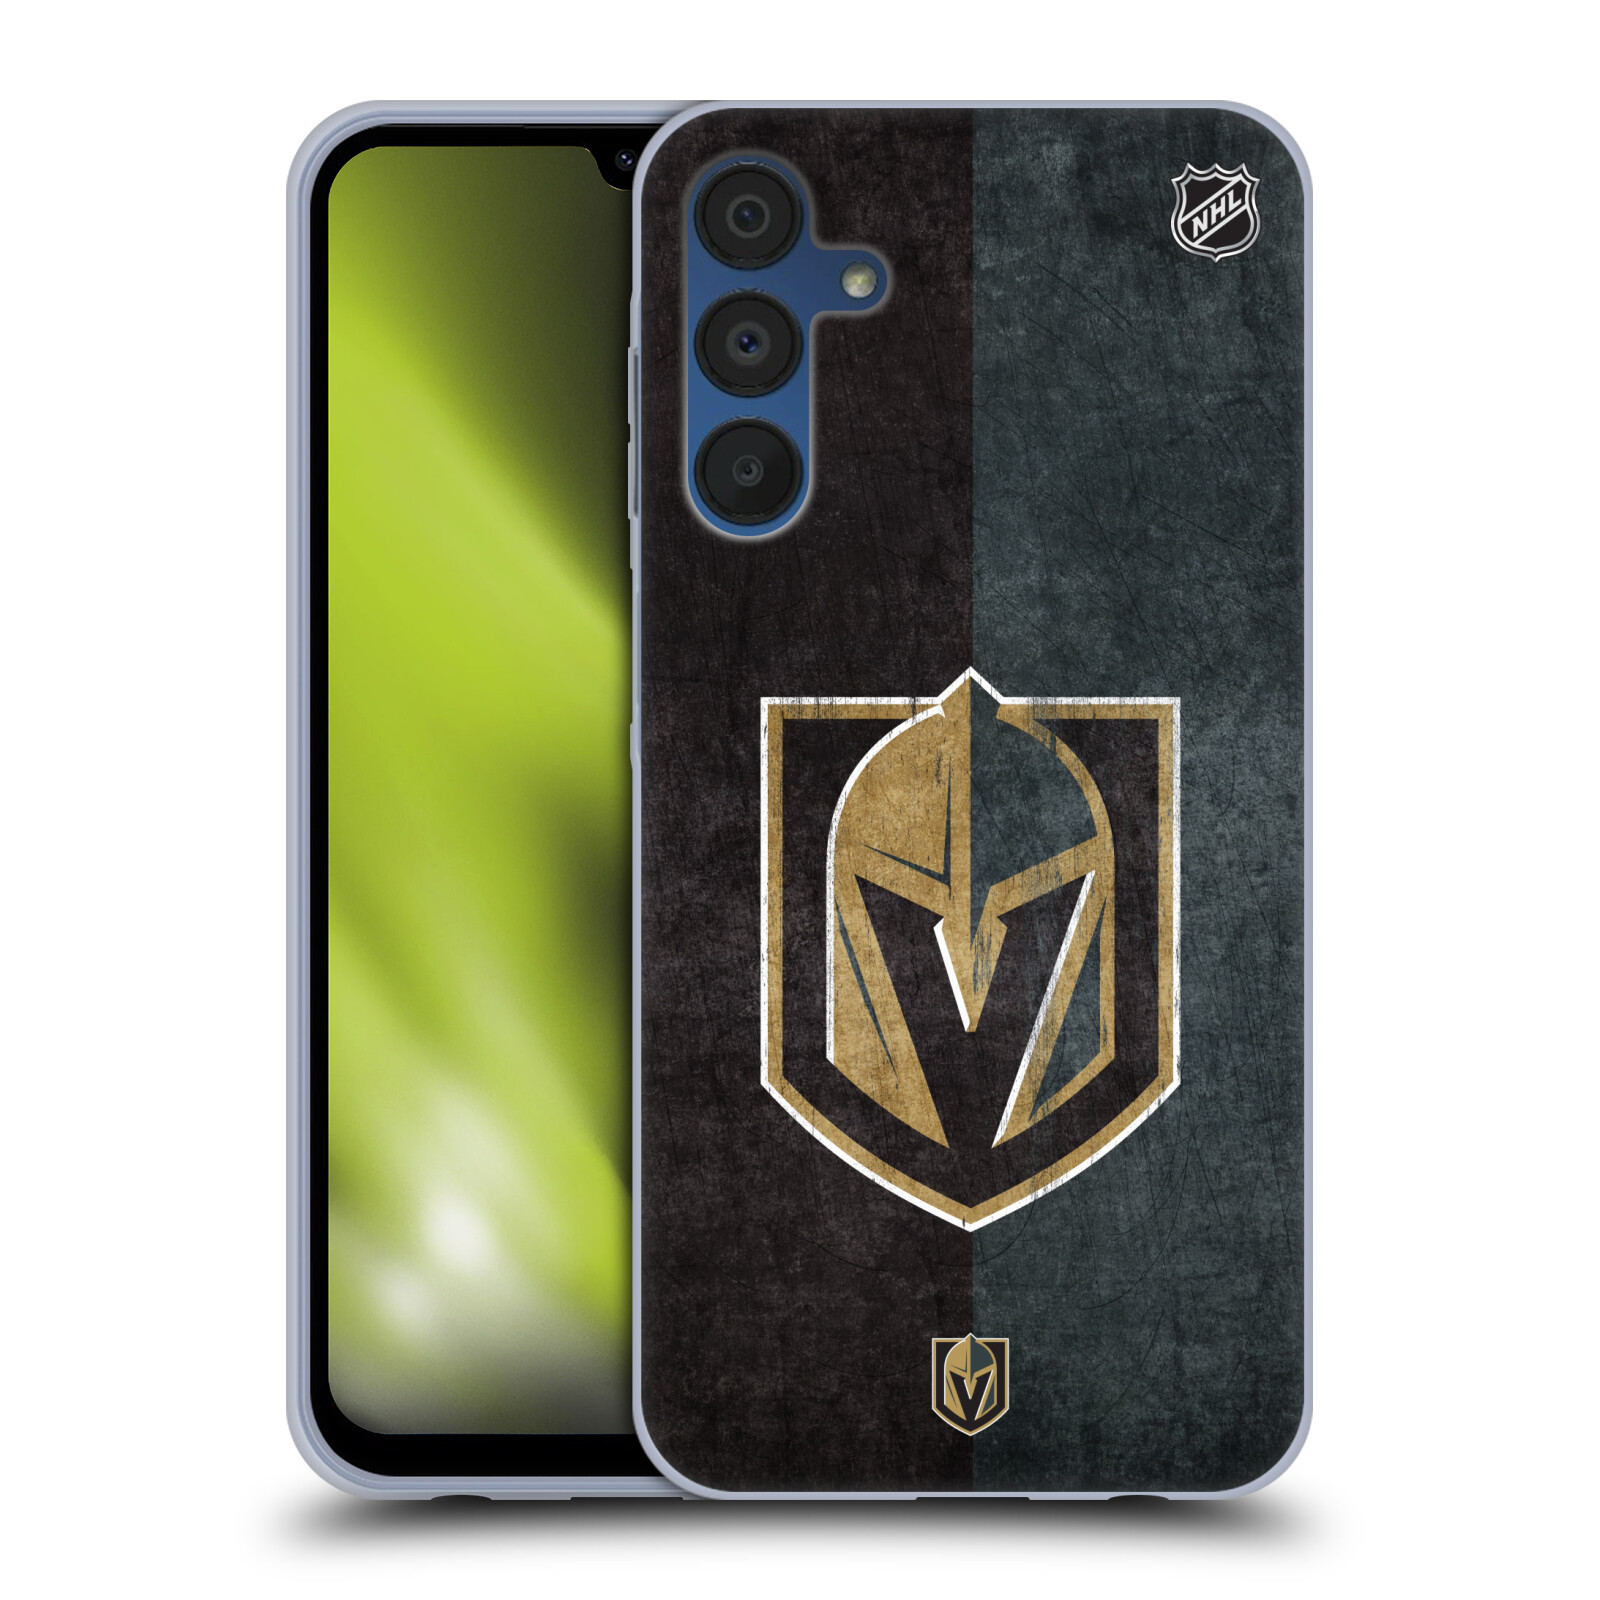 Silikonové pouzdro na mobil Samsung Galaxy A15 / A15 5G - NHL - Půlené logo Vegas Golden Knights (Silikonový kryt, obal, pouzdro na mobilní telefon Samsung Galaxy A15 / A15 5G s licencovaným motivem NHL - Půlené logo Vegas Golden Knights)